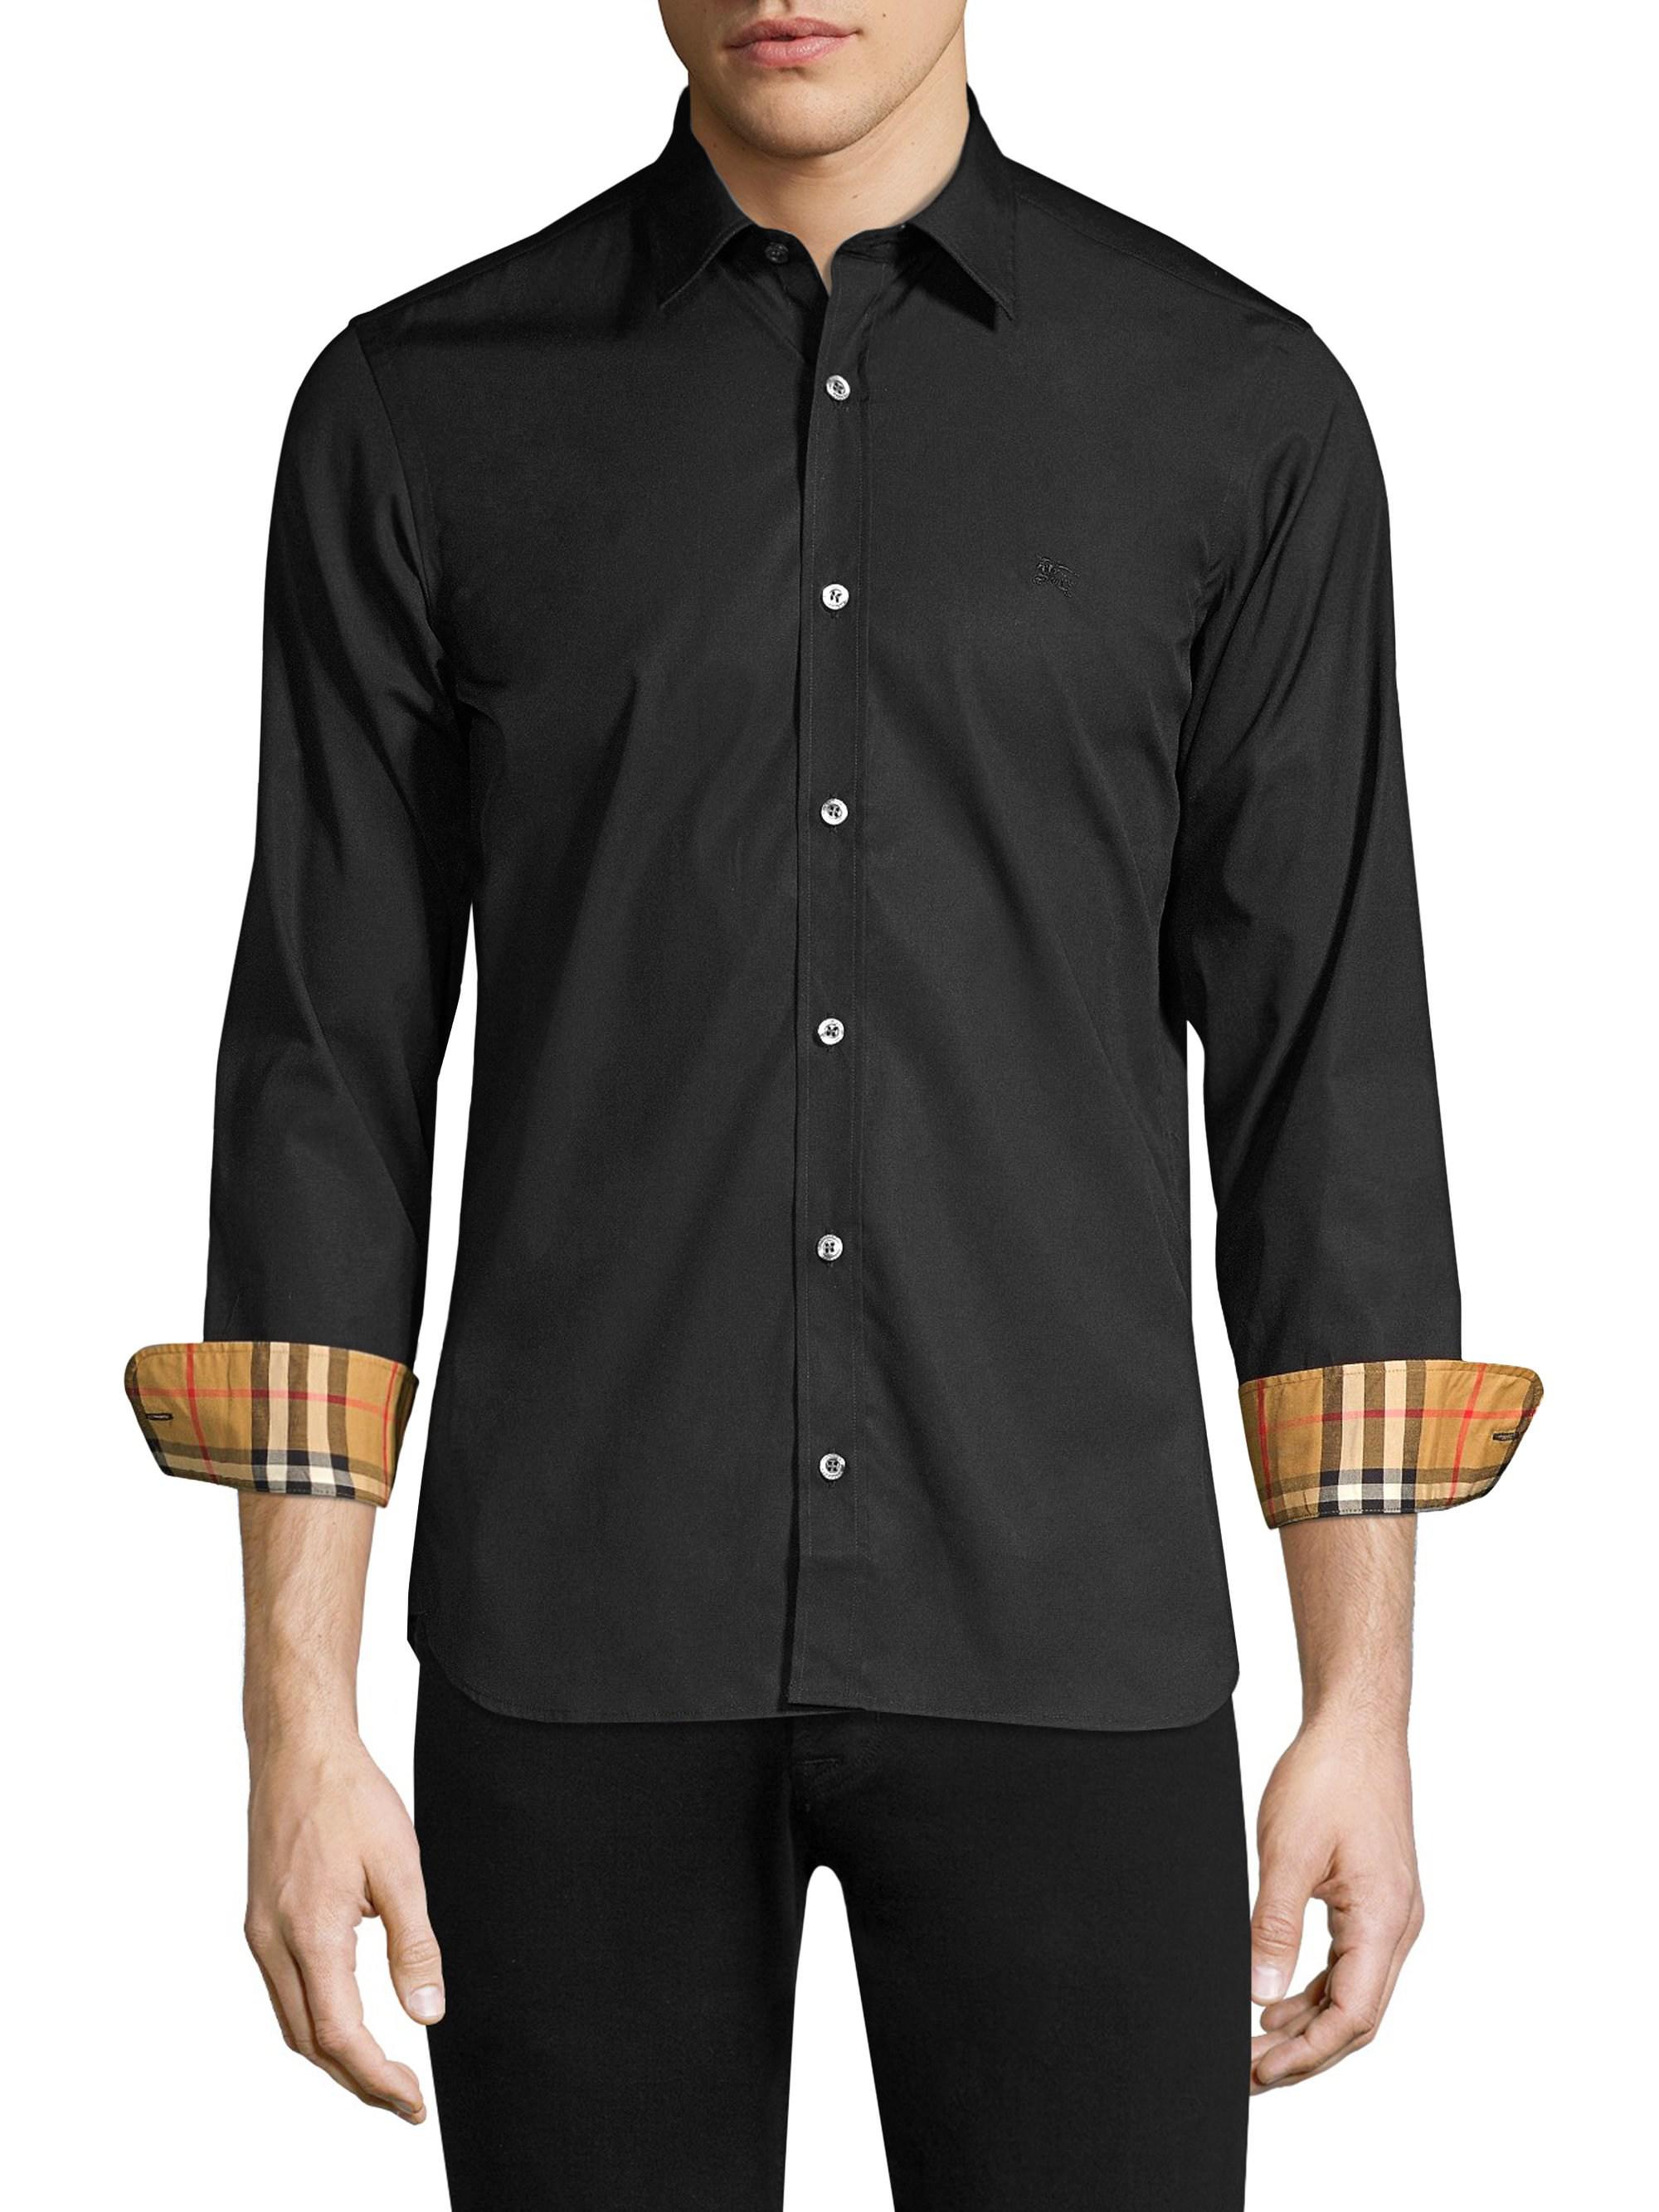 black button up burberry shirt